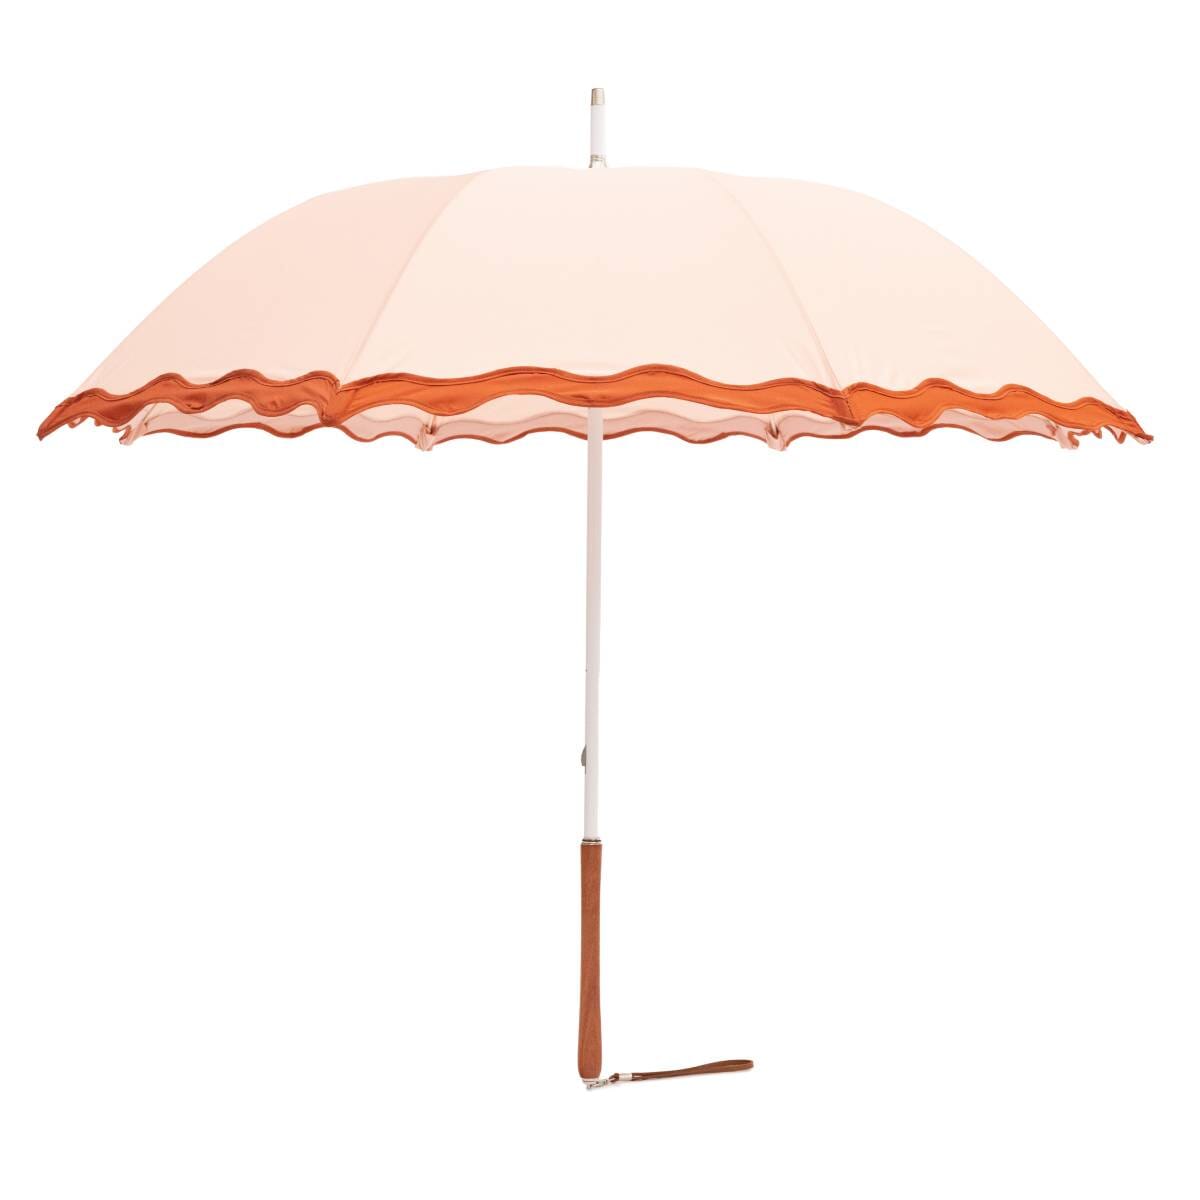 Studio image of riviera pink rain umbrella